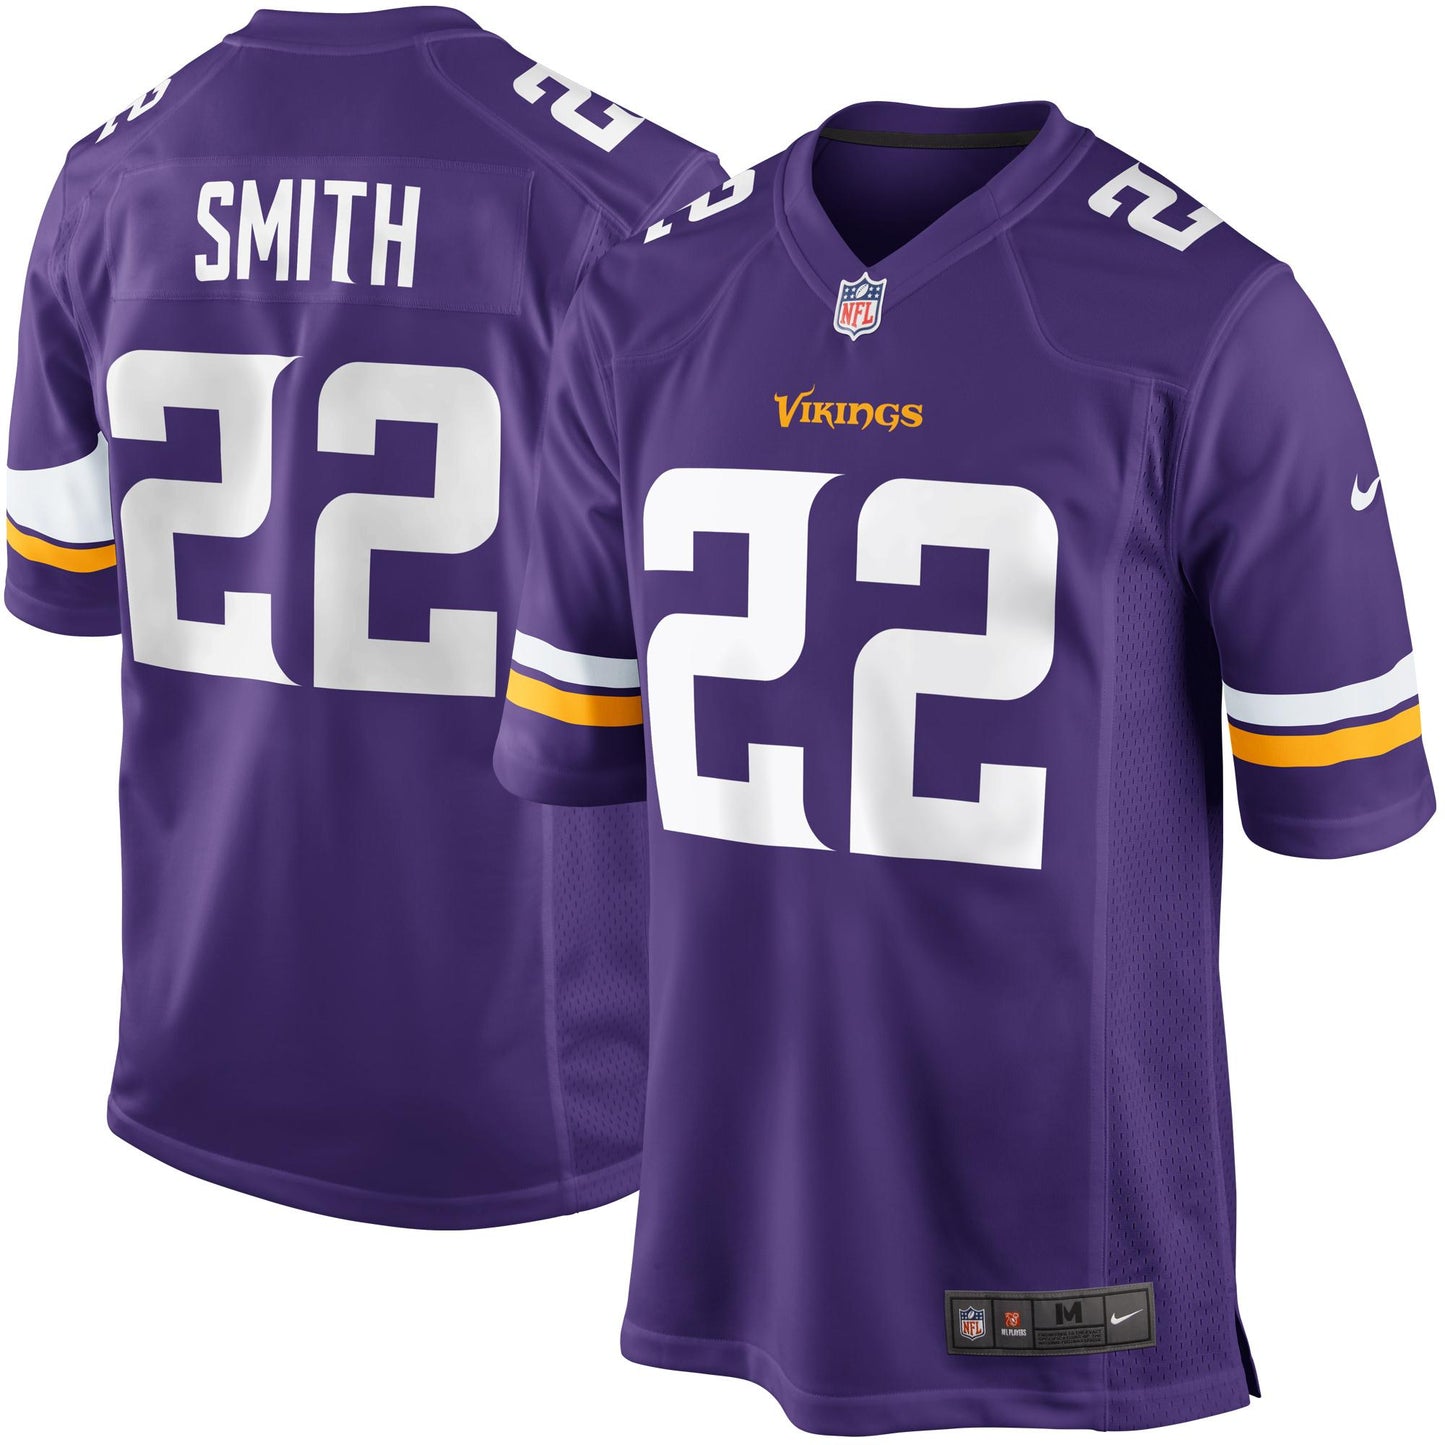 Harrison Smith Minnesota Vikings Nike Youth Game Jersey - Purple